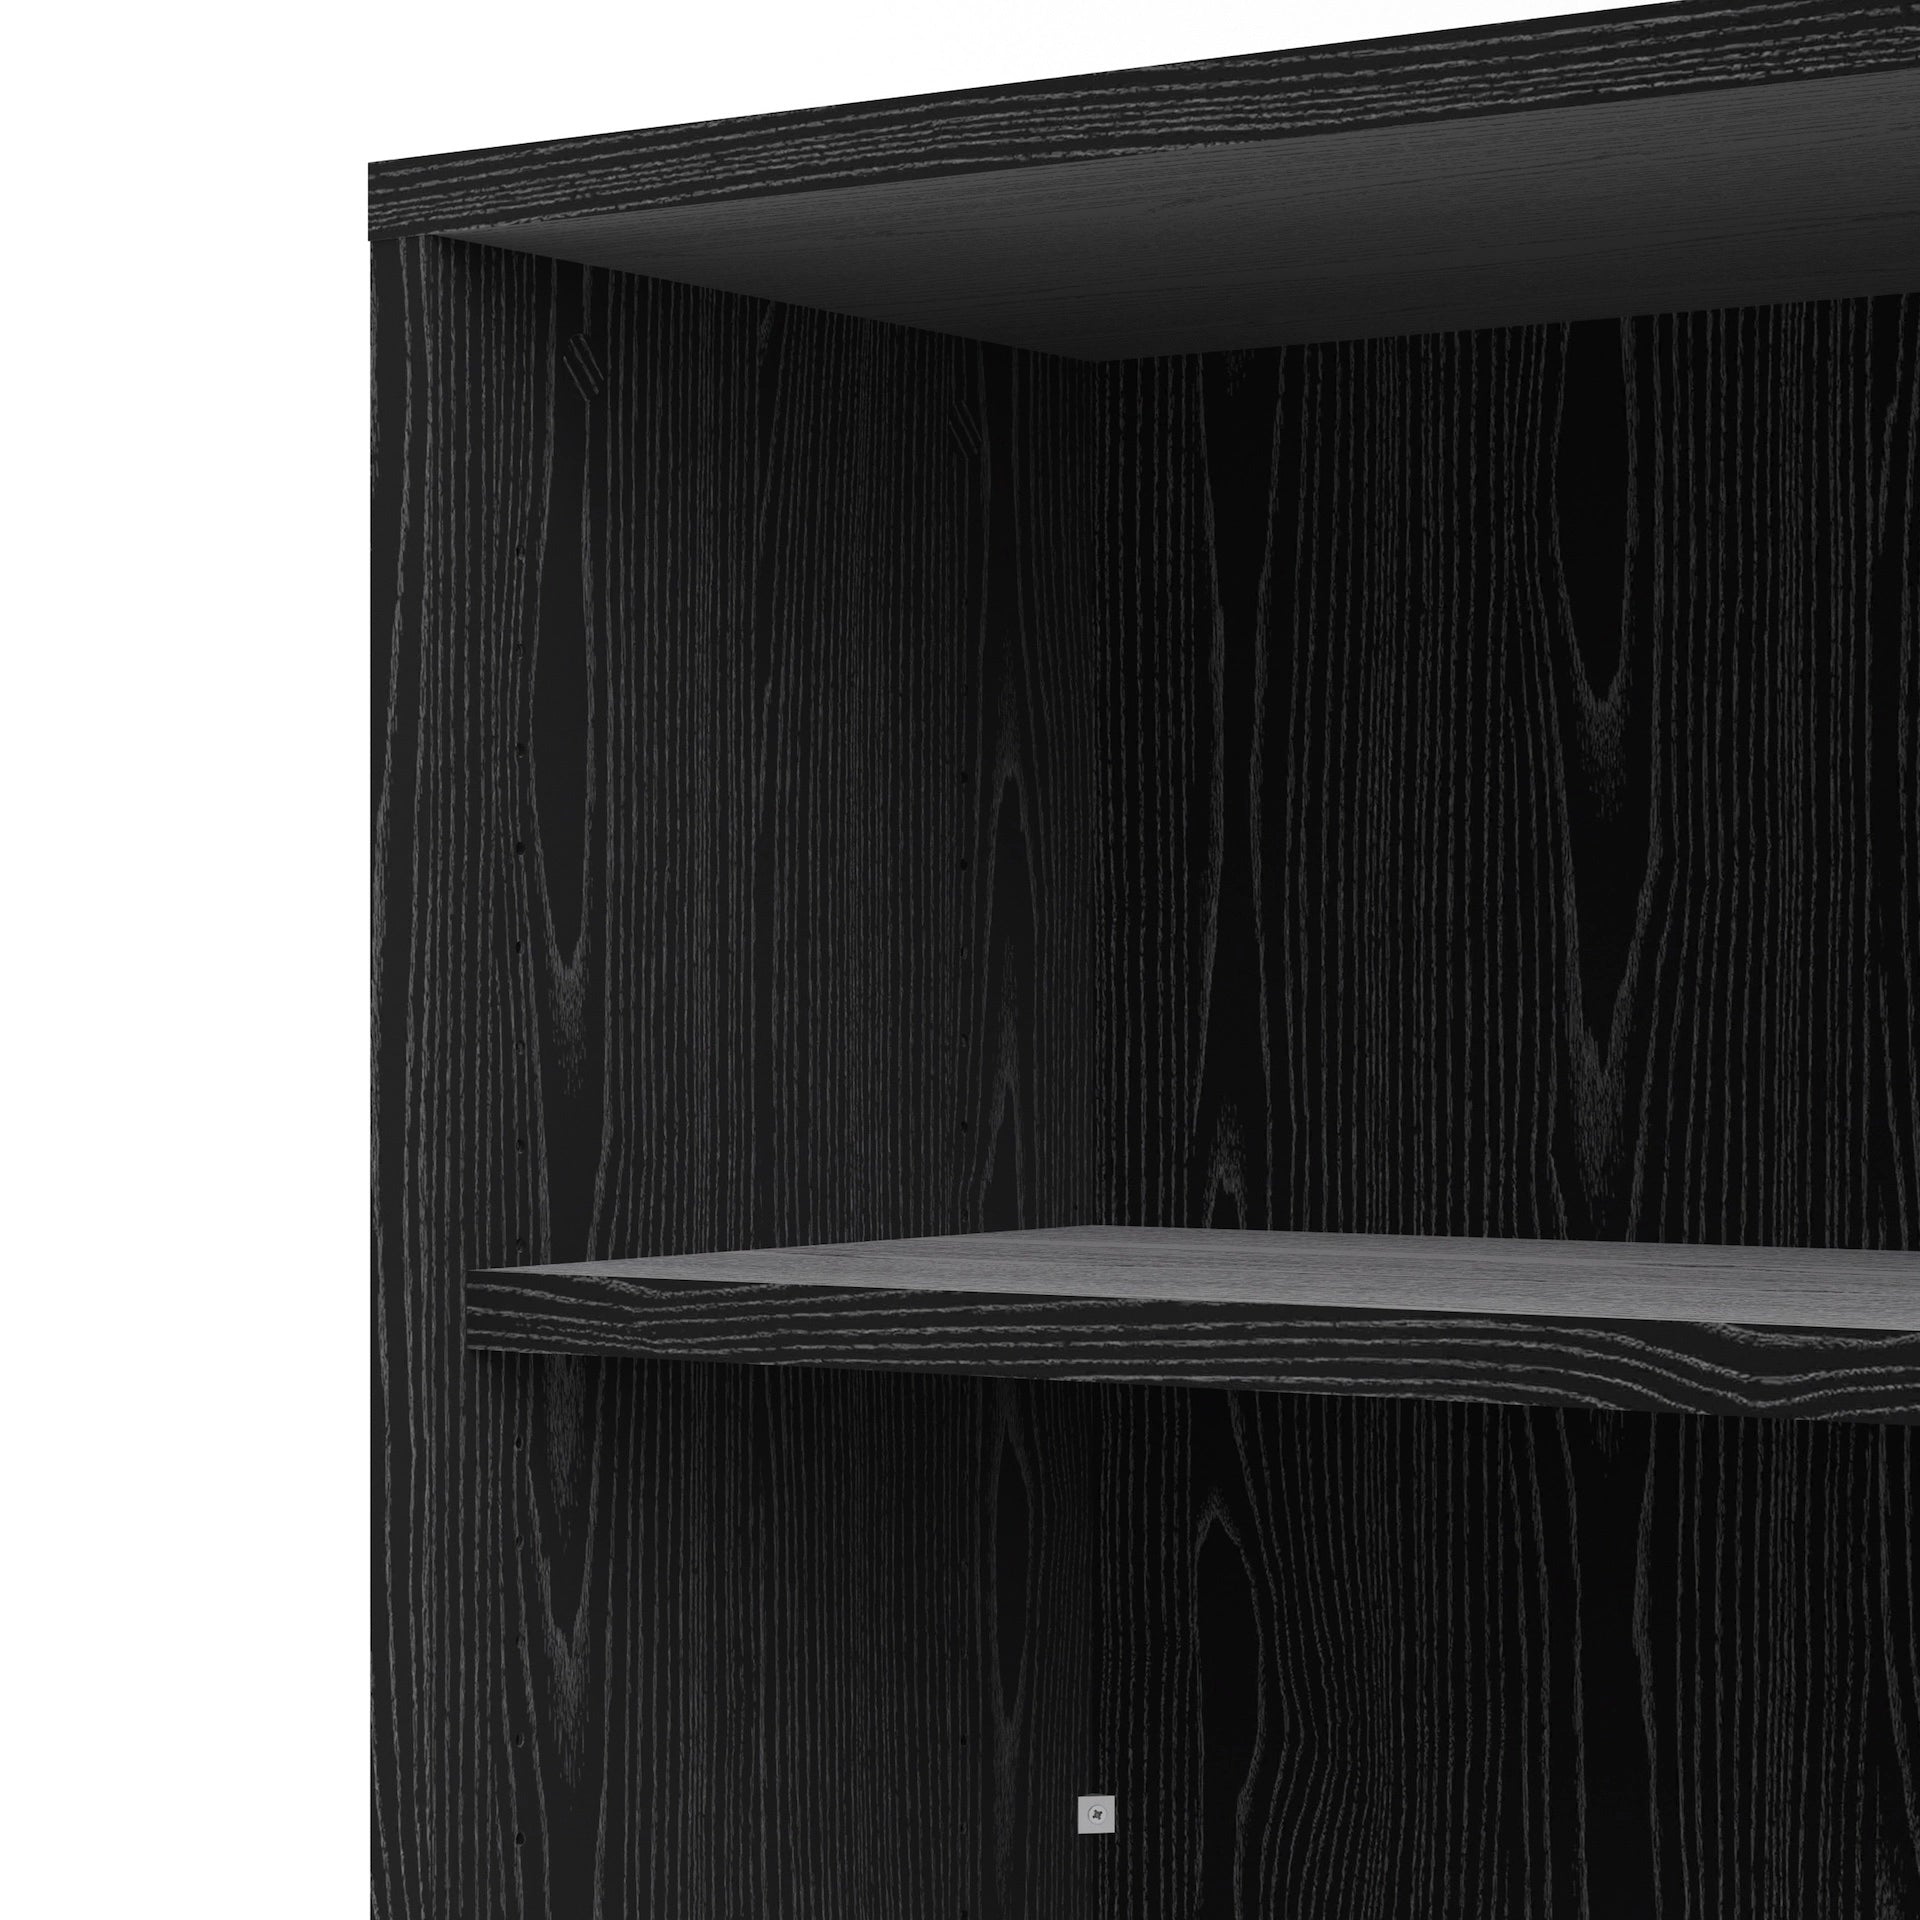 Furniture To Go Prima Bookcase 2 Shelves in Black Woodgrain